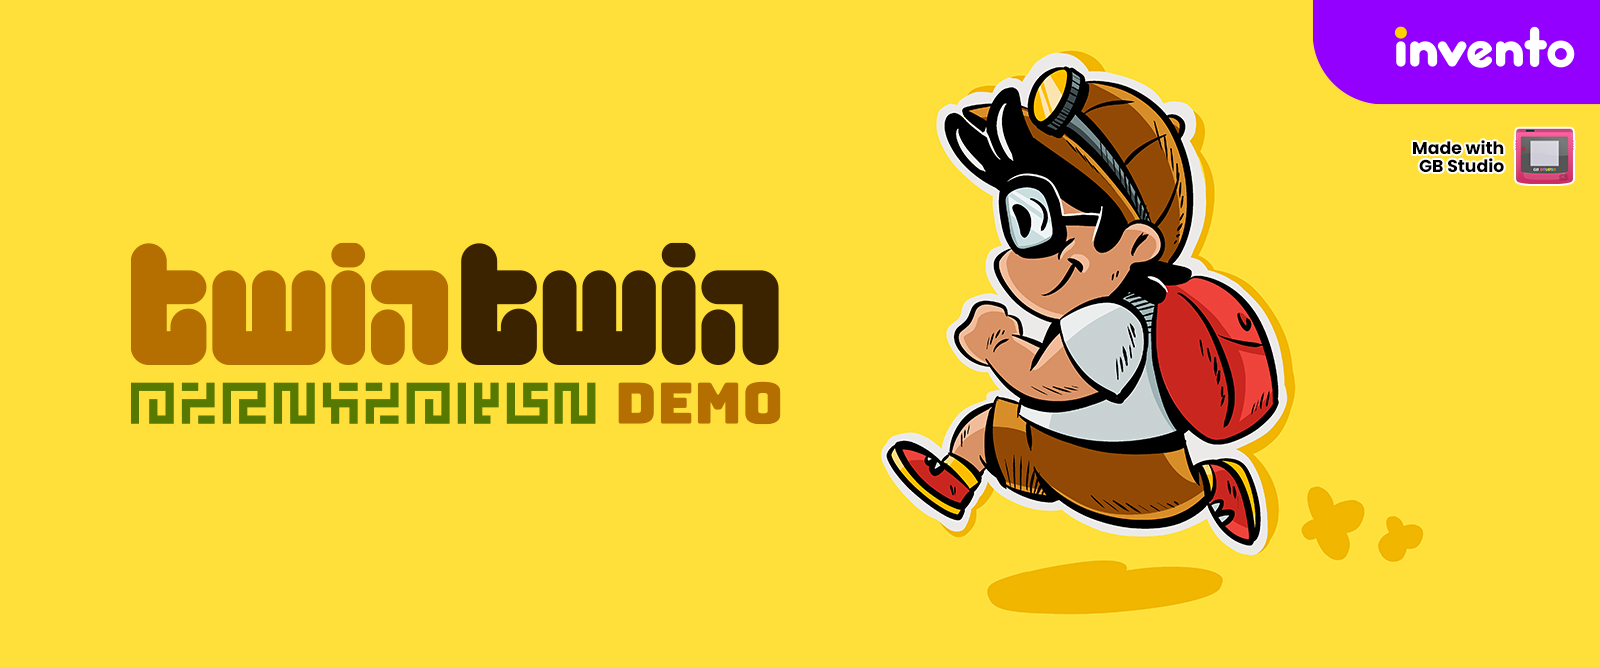 TwinTwin Demo